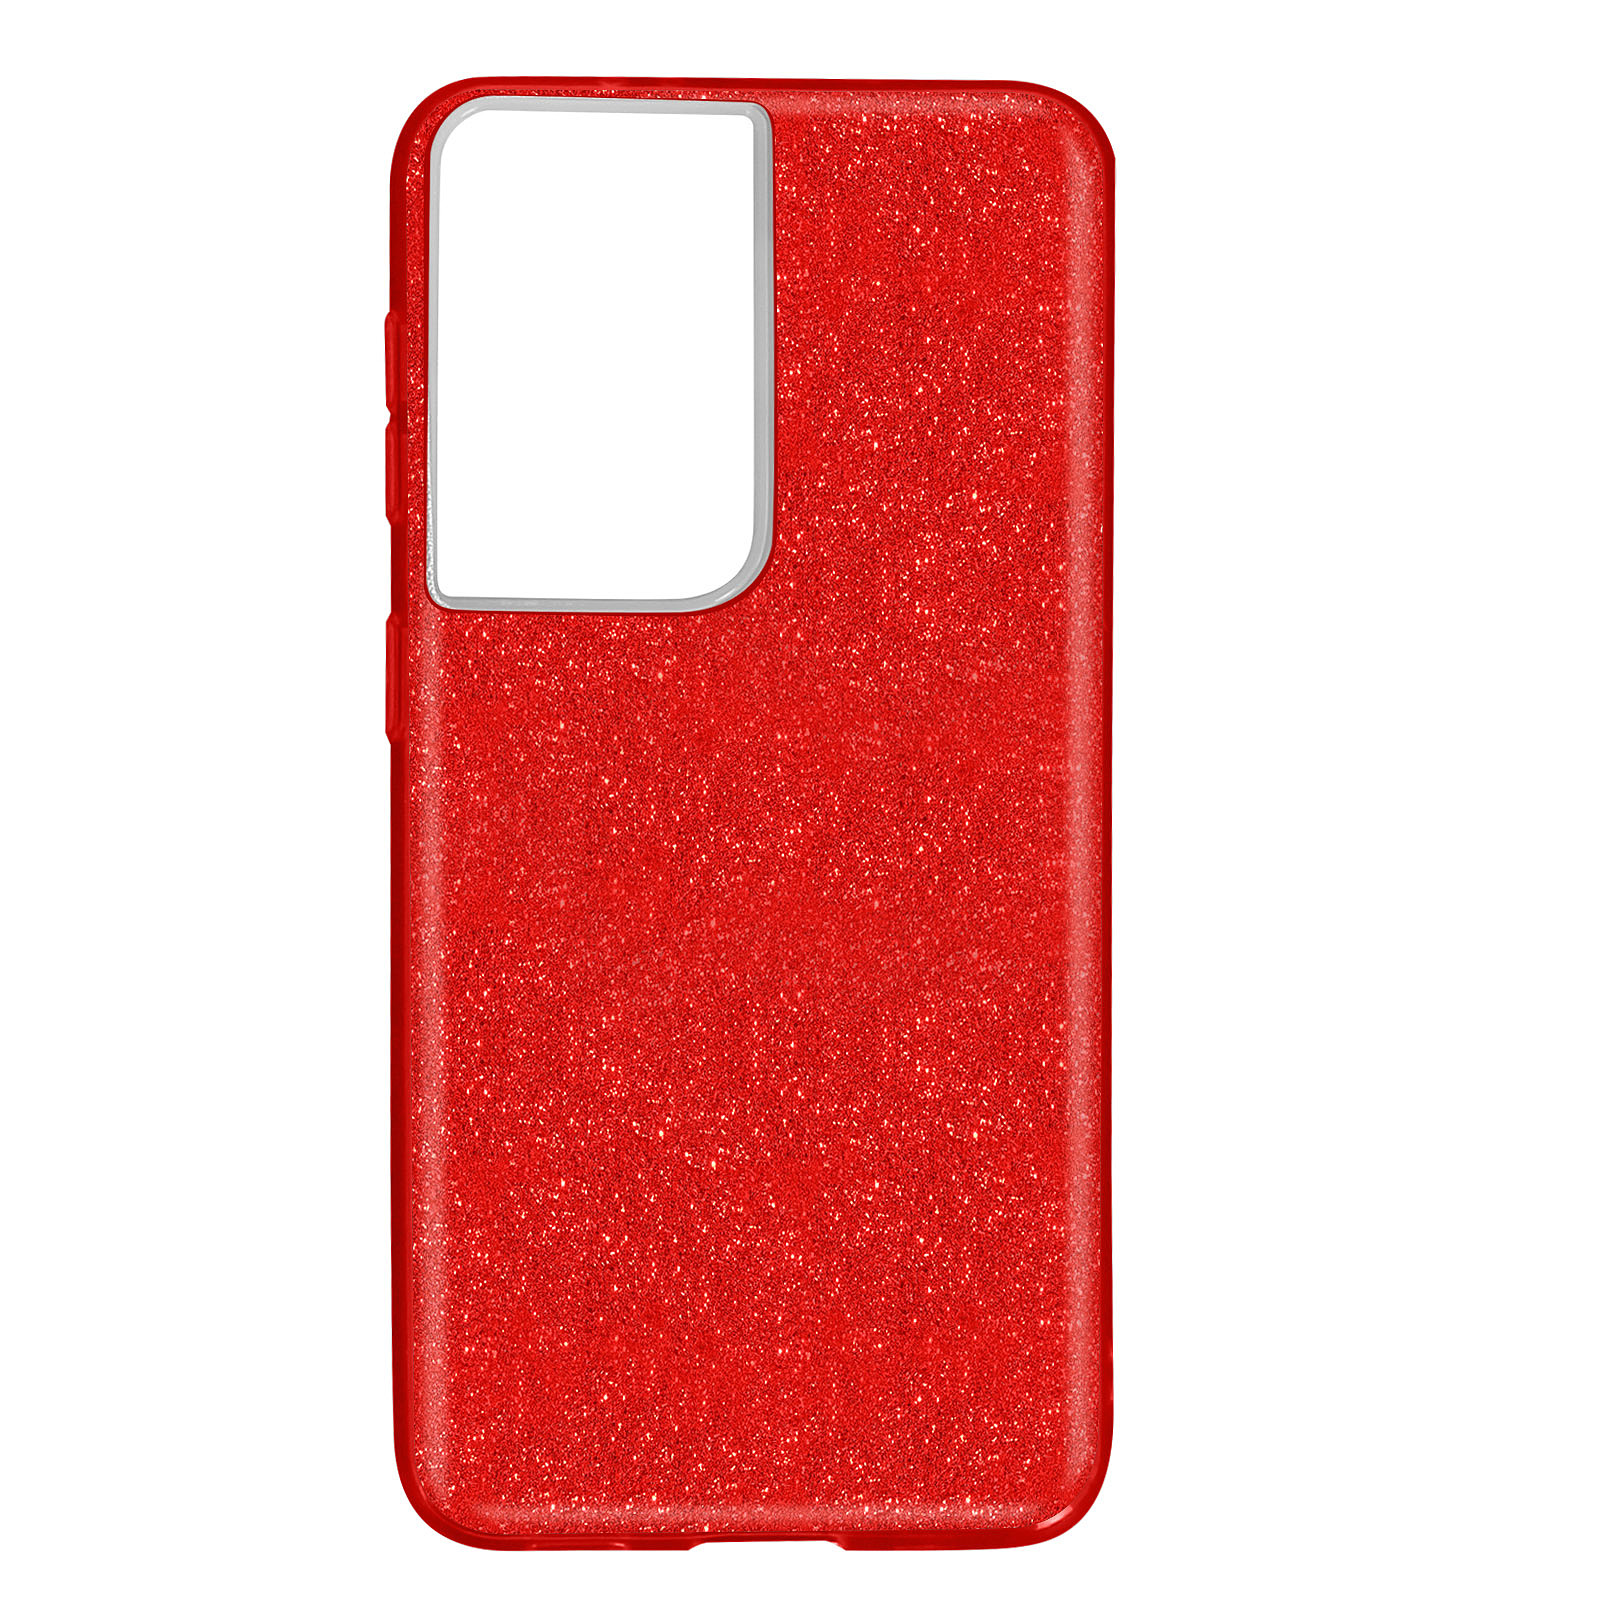 Avizar Coque pour Samsung Galaxy S21 Ultra Design Paillette Amovible Silicone Rouge - Coque telephone Avizar